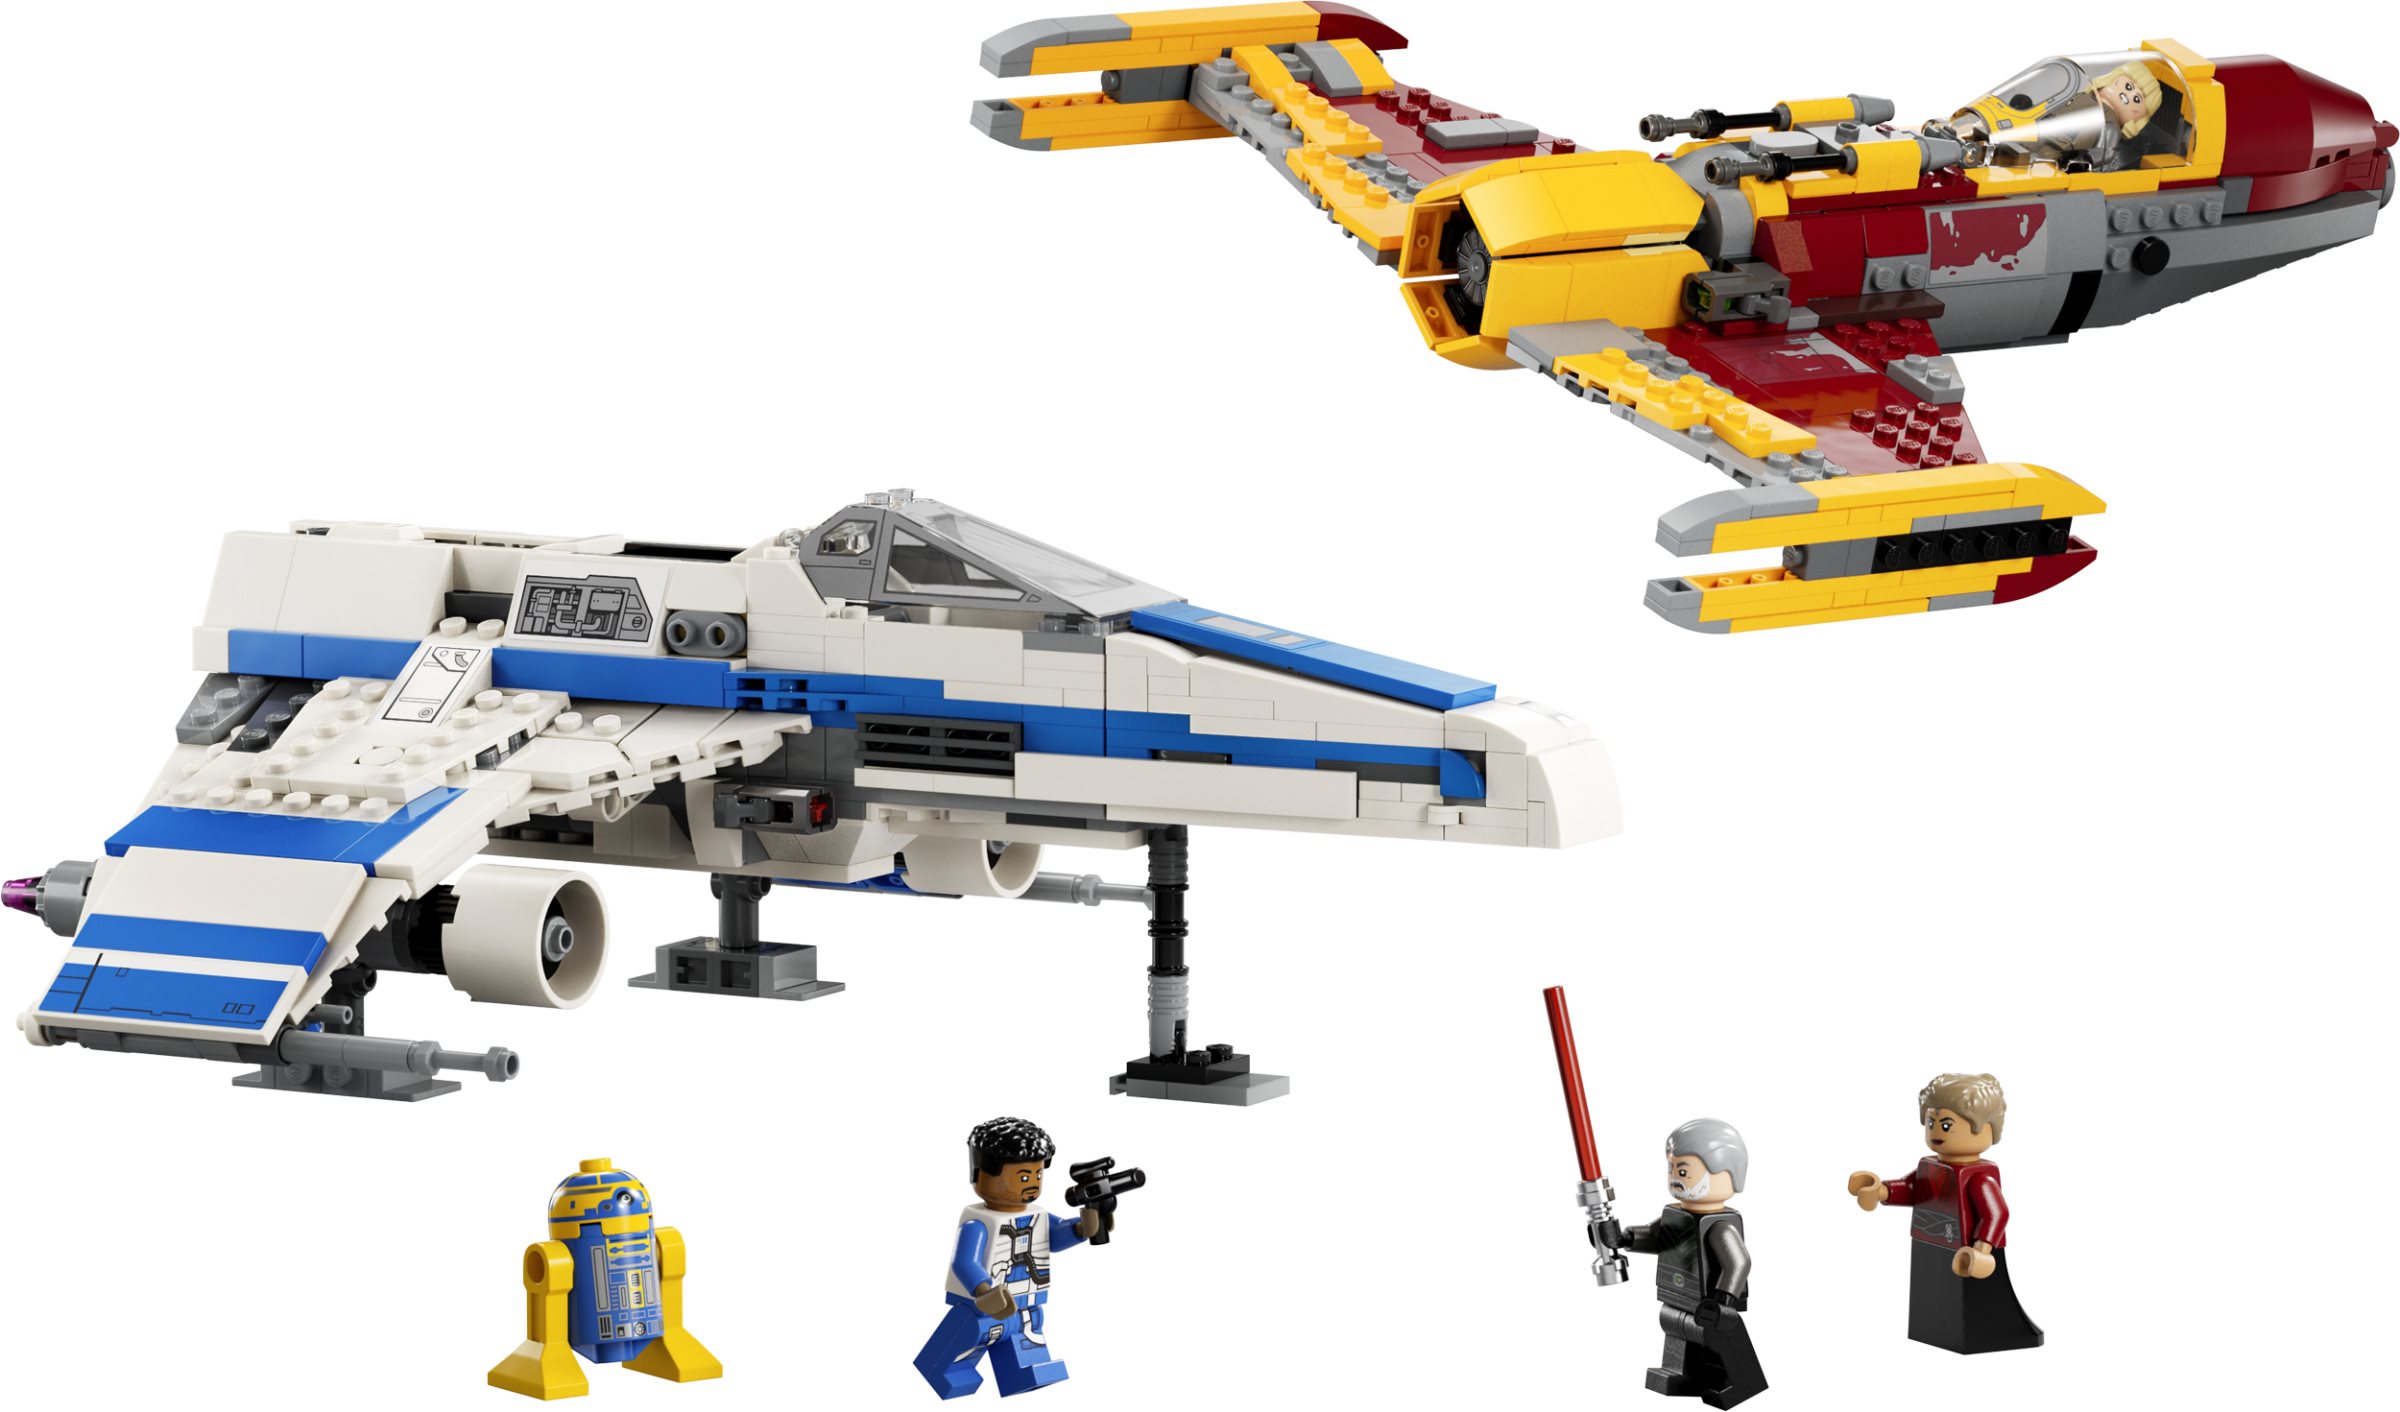 Three new LEGO Star Wars 2023 sets revealed – Ahsoka, Chewbacca